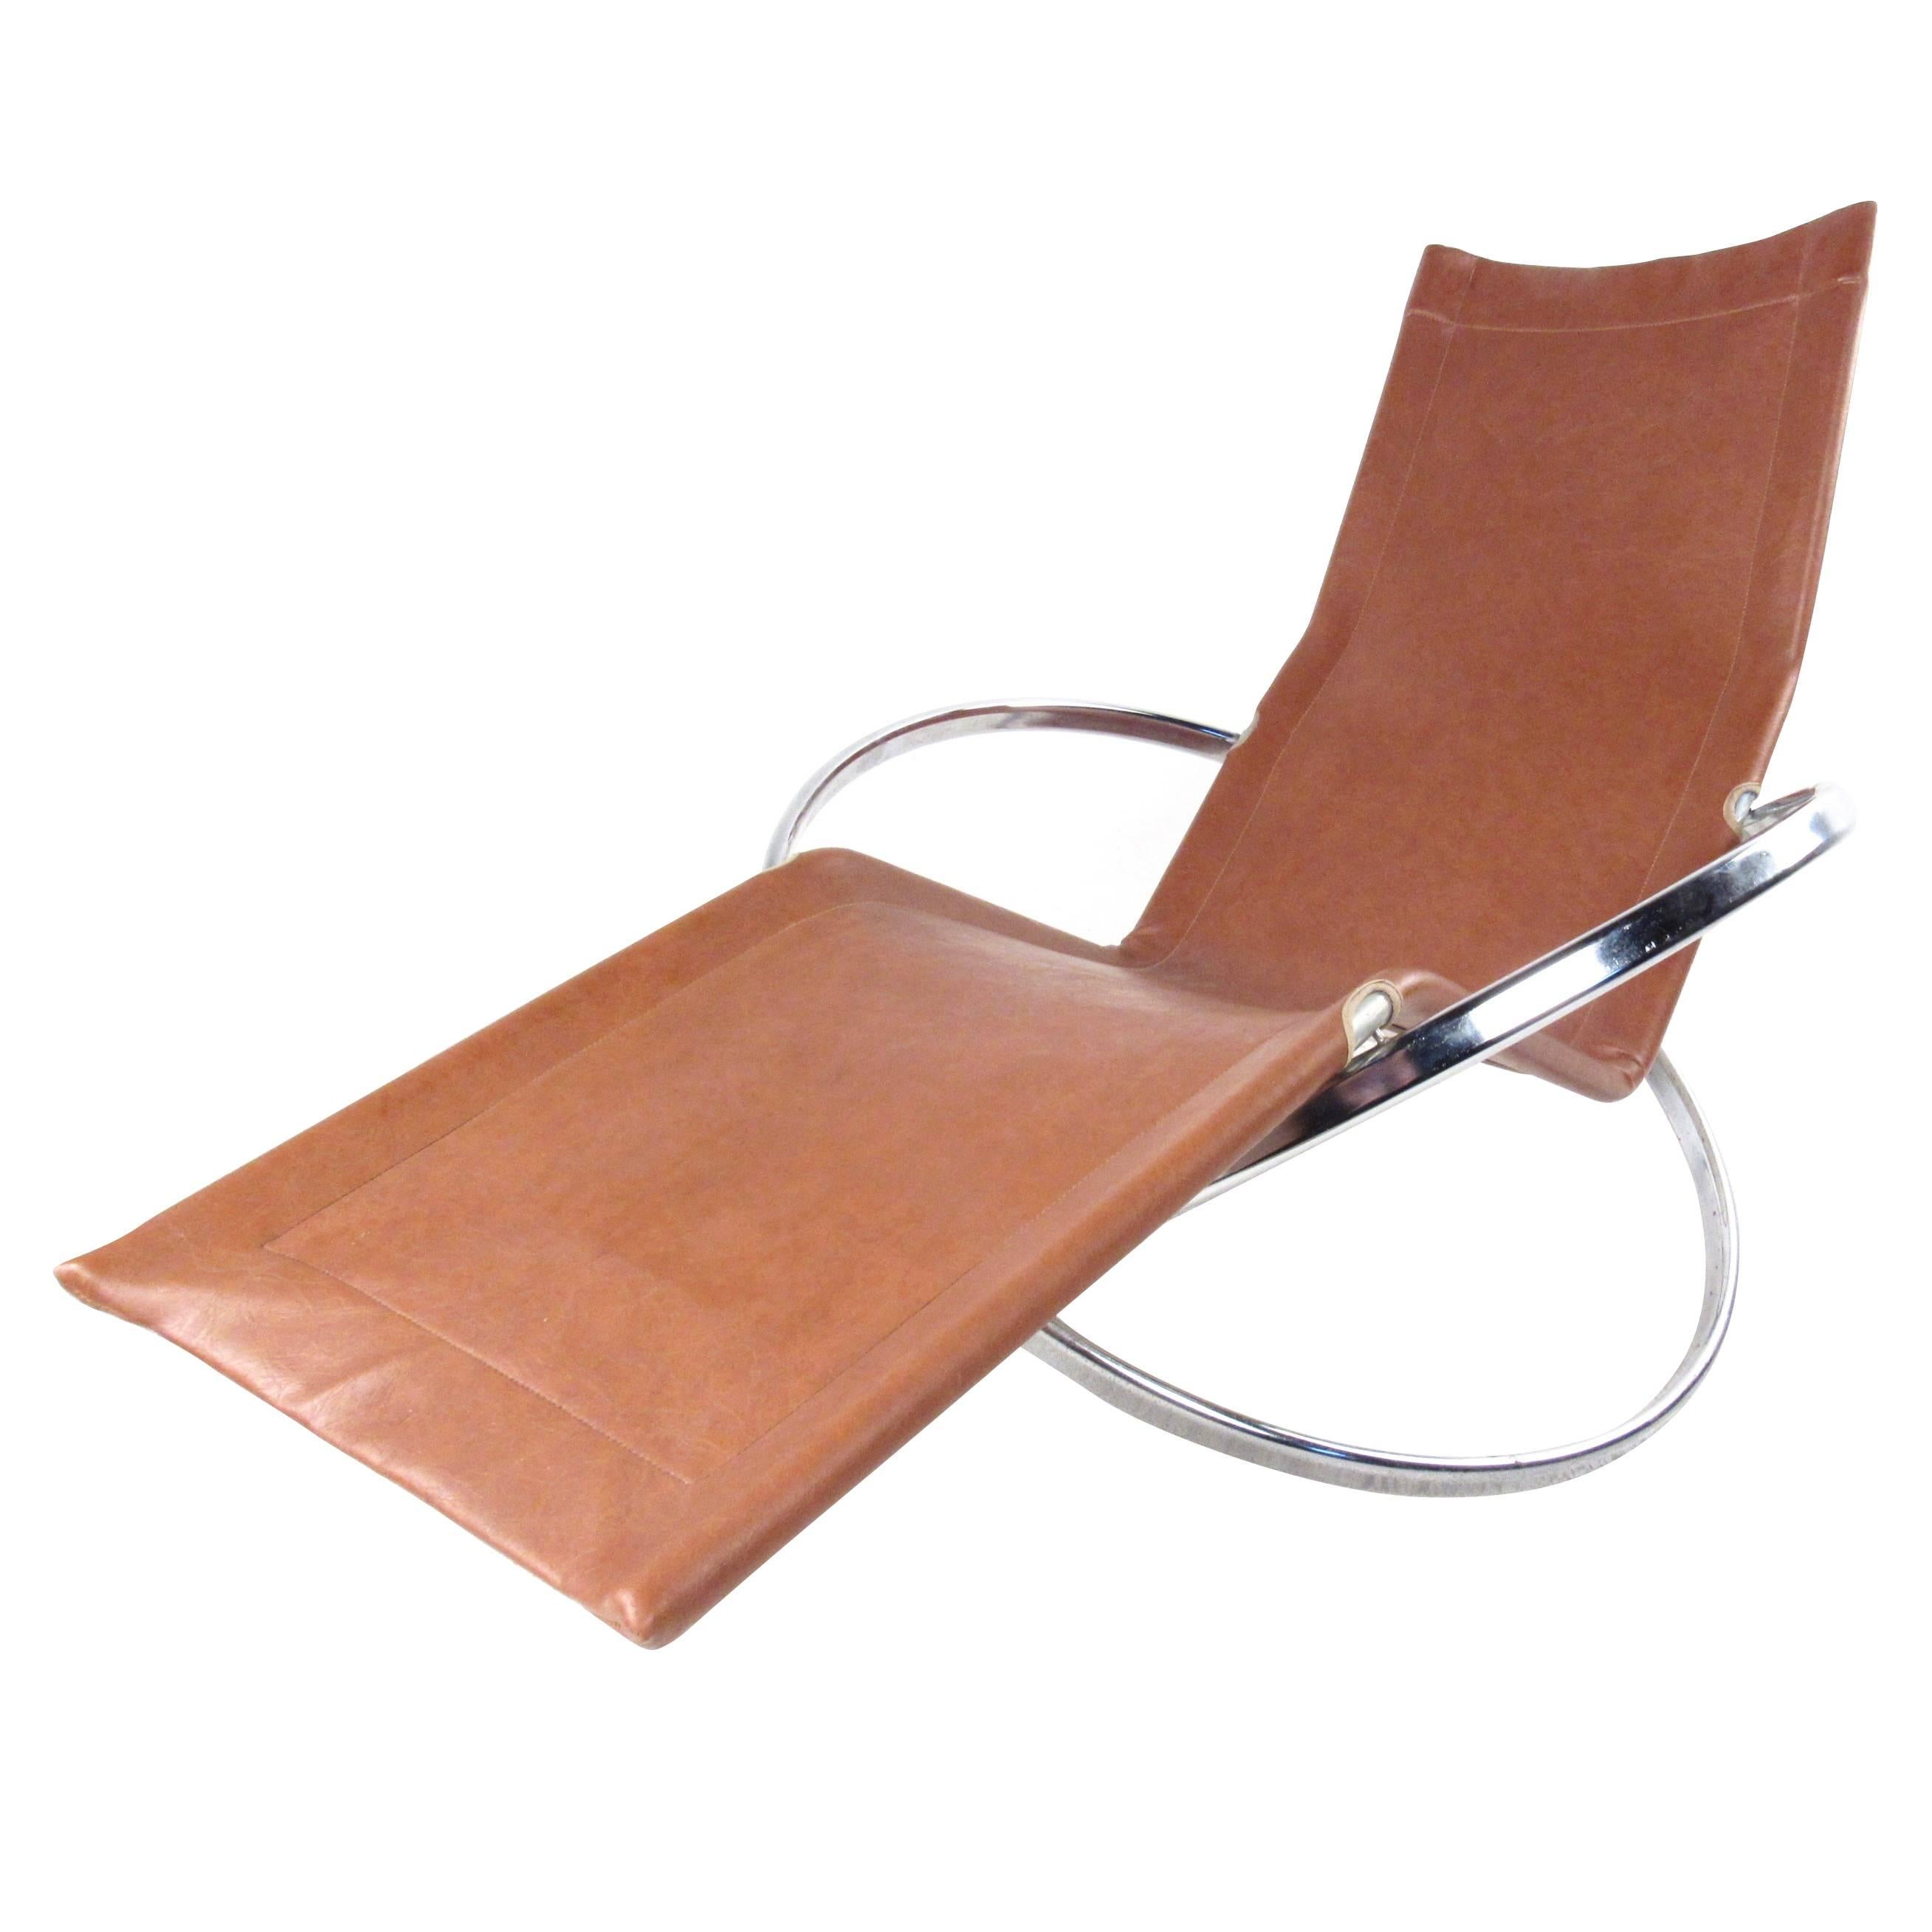 Modernist Chrome and Vinyl Chaise Lounge Chair